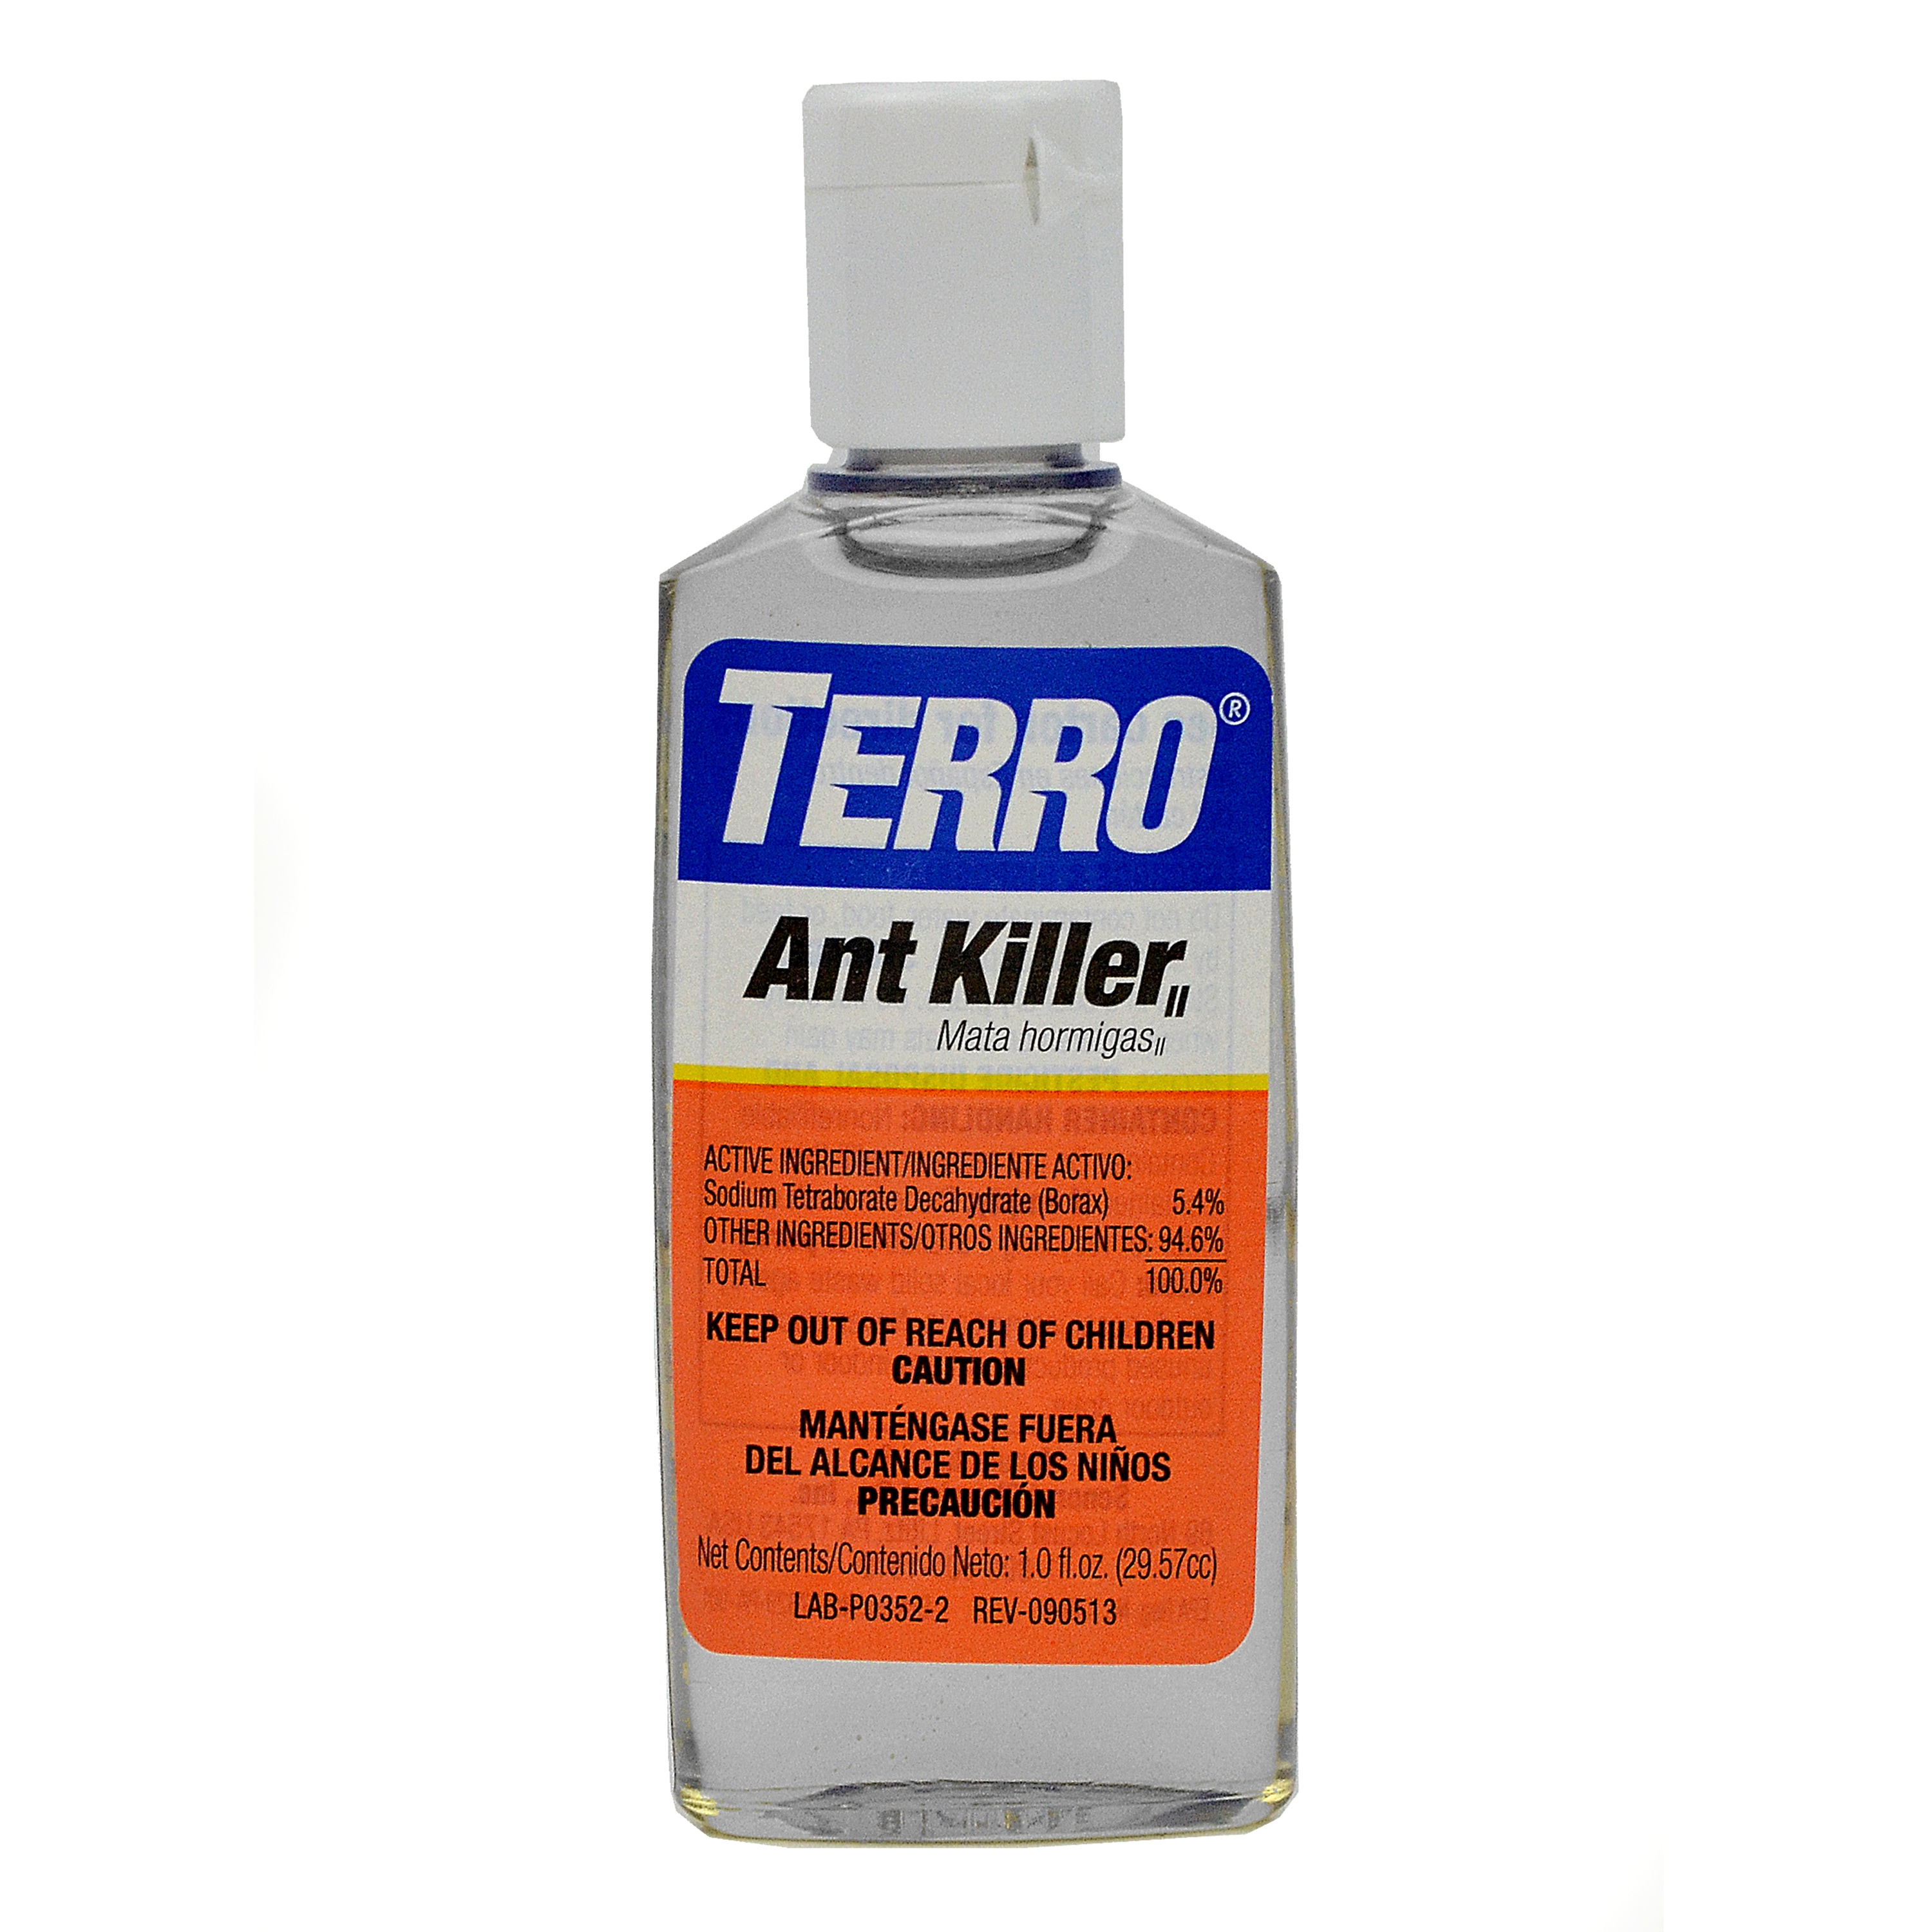 TERRO 1-oz Ant Killer in the Pesticides department at